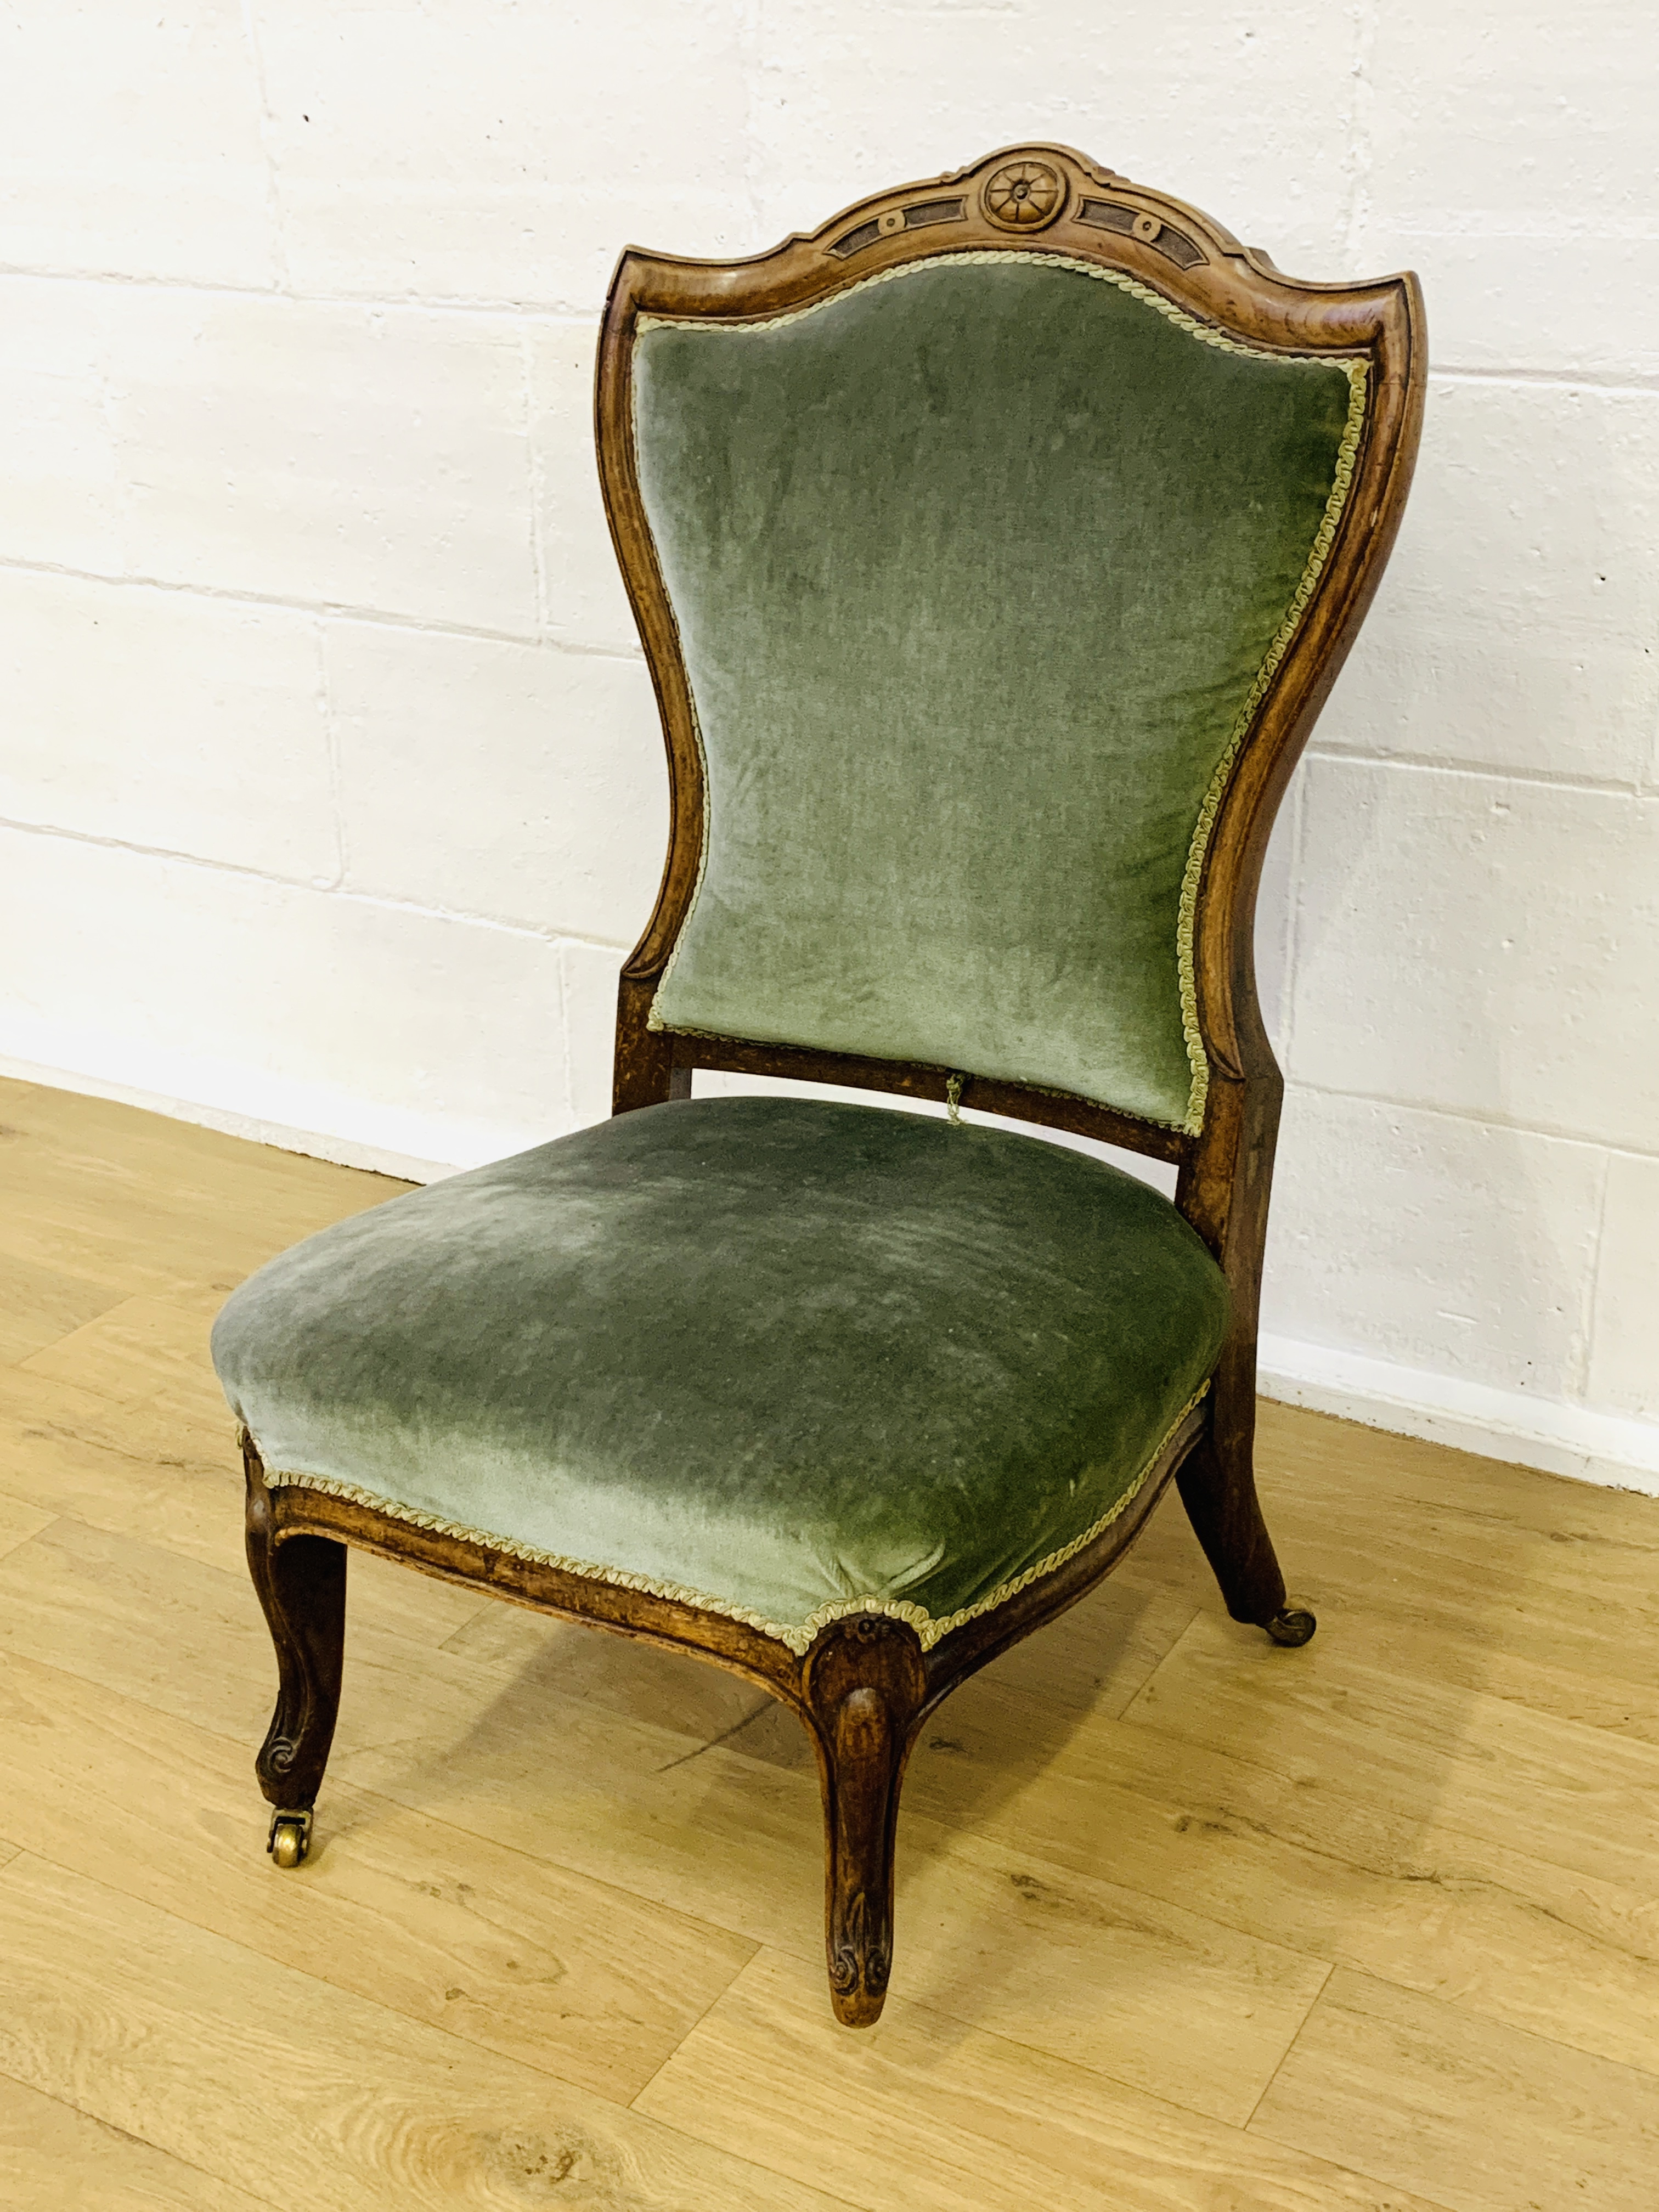 Mahogany show wood chair - Image 4 of 4